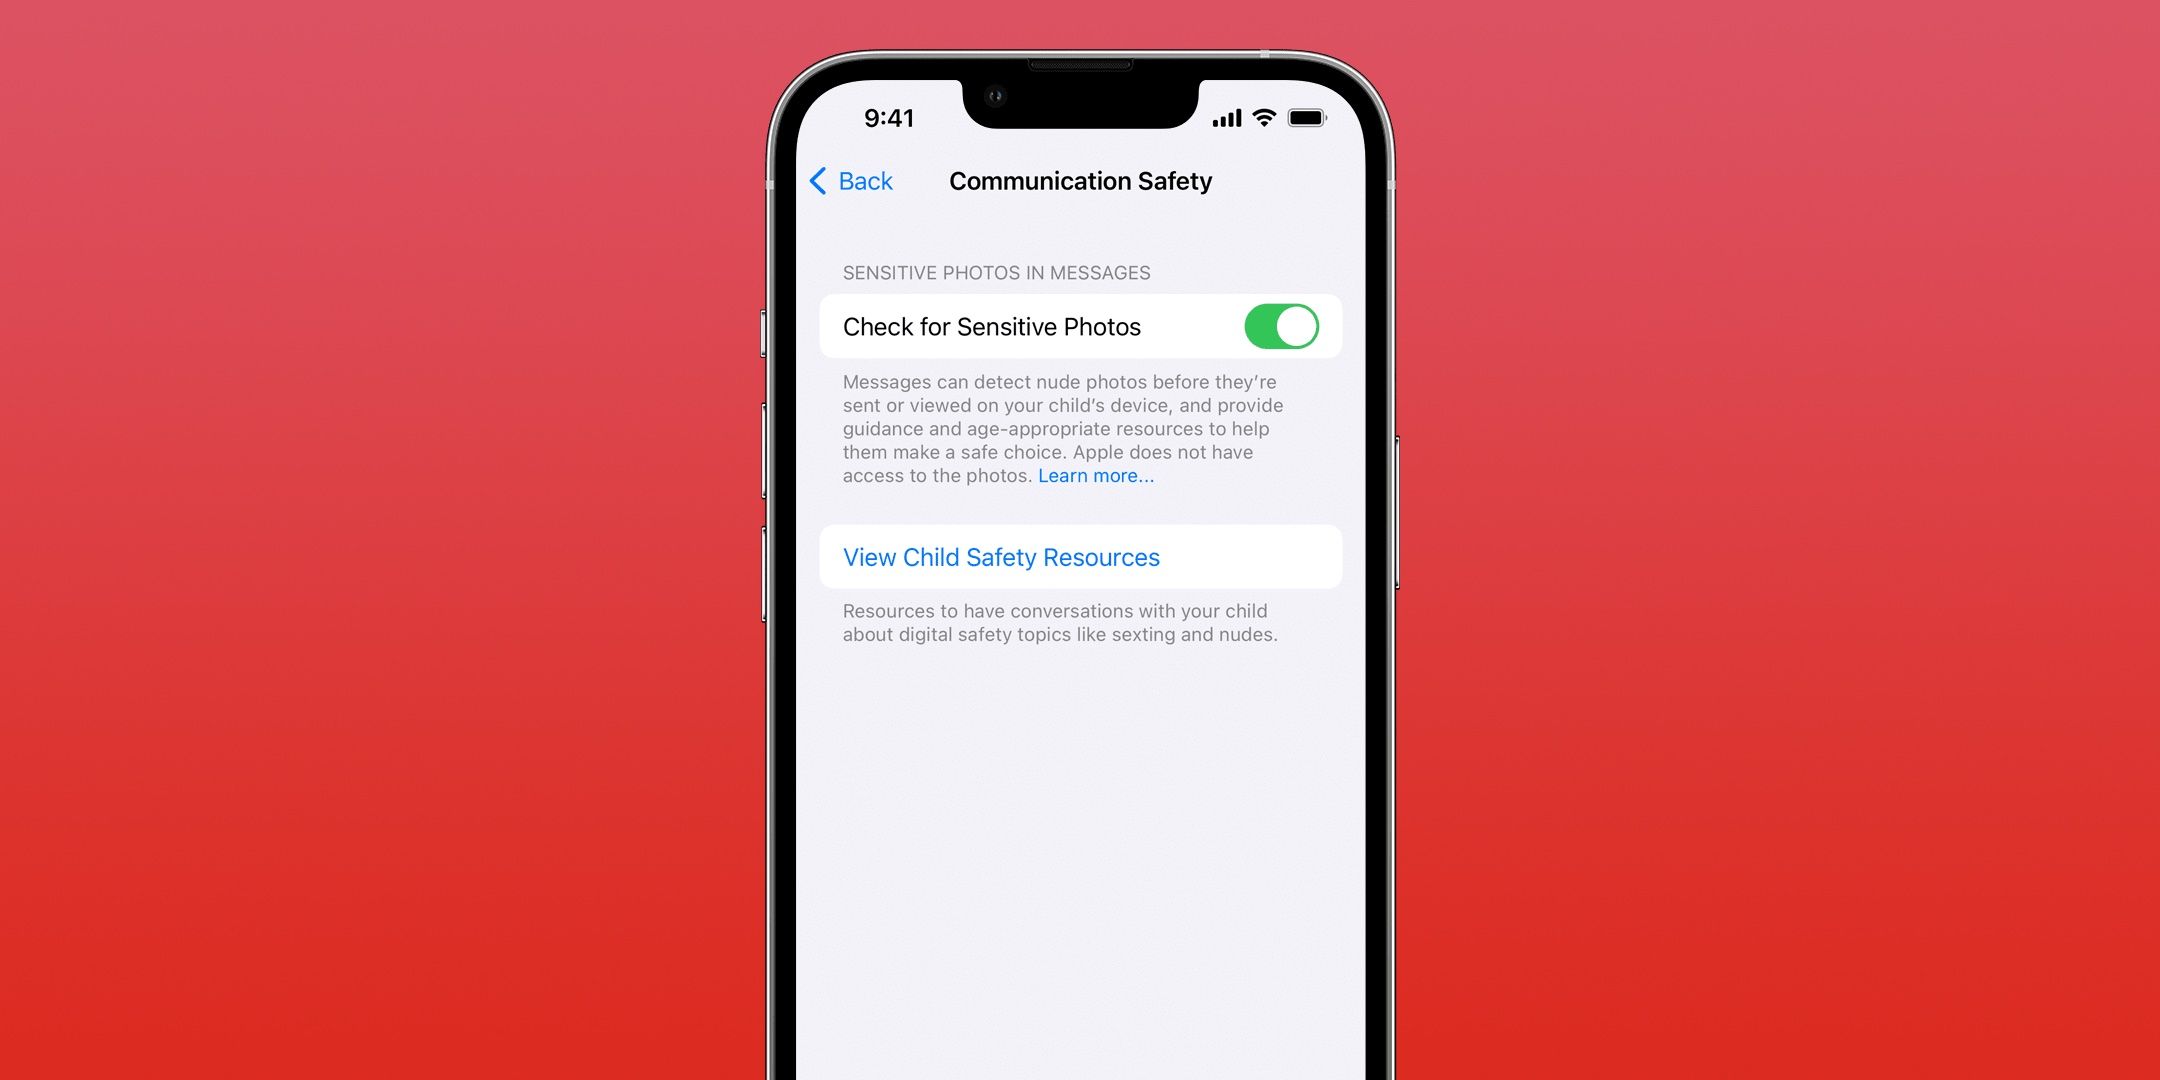 Communication Safety iOS